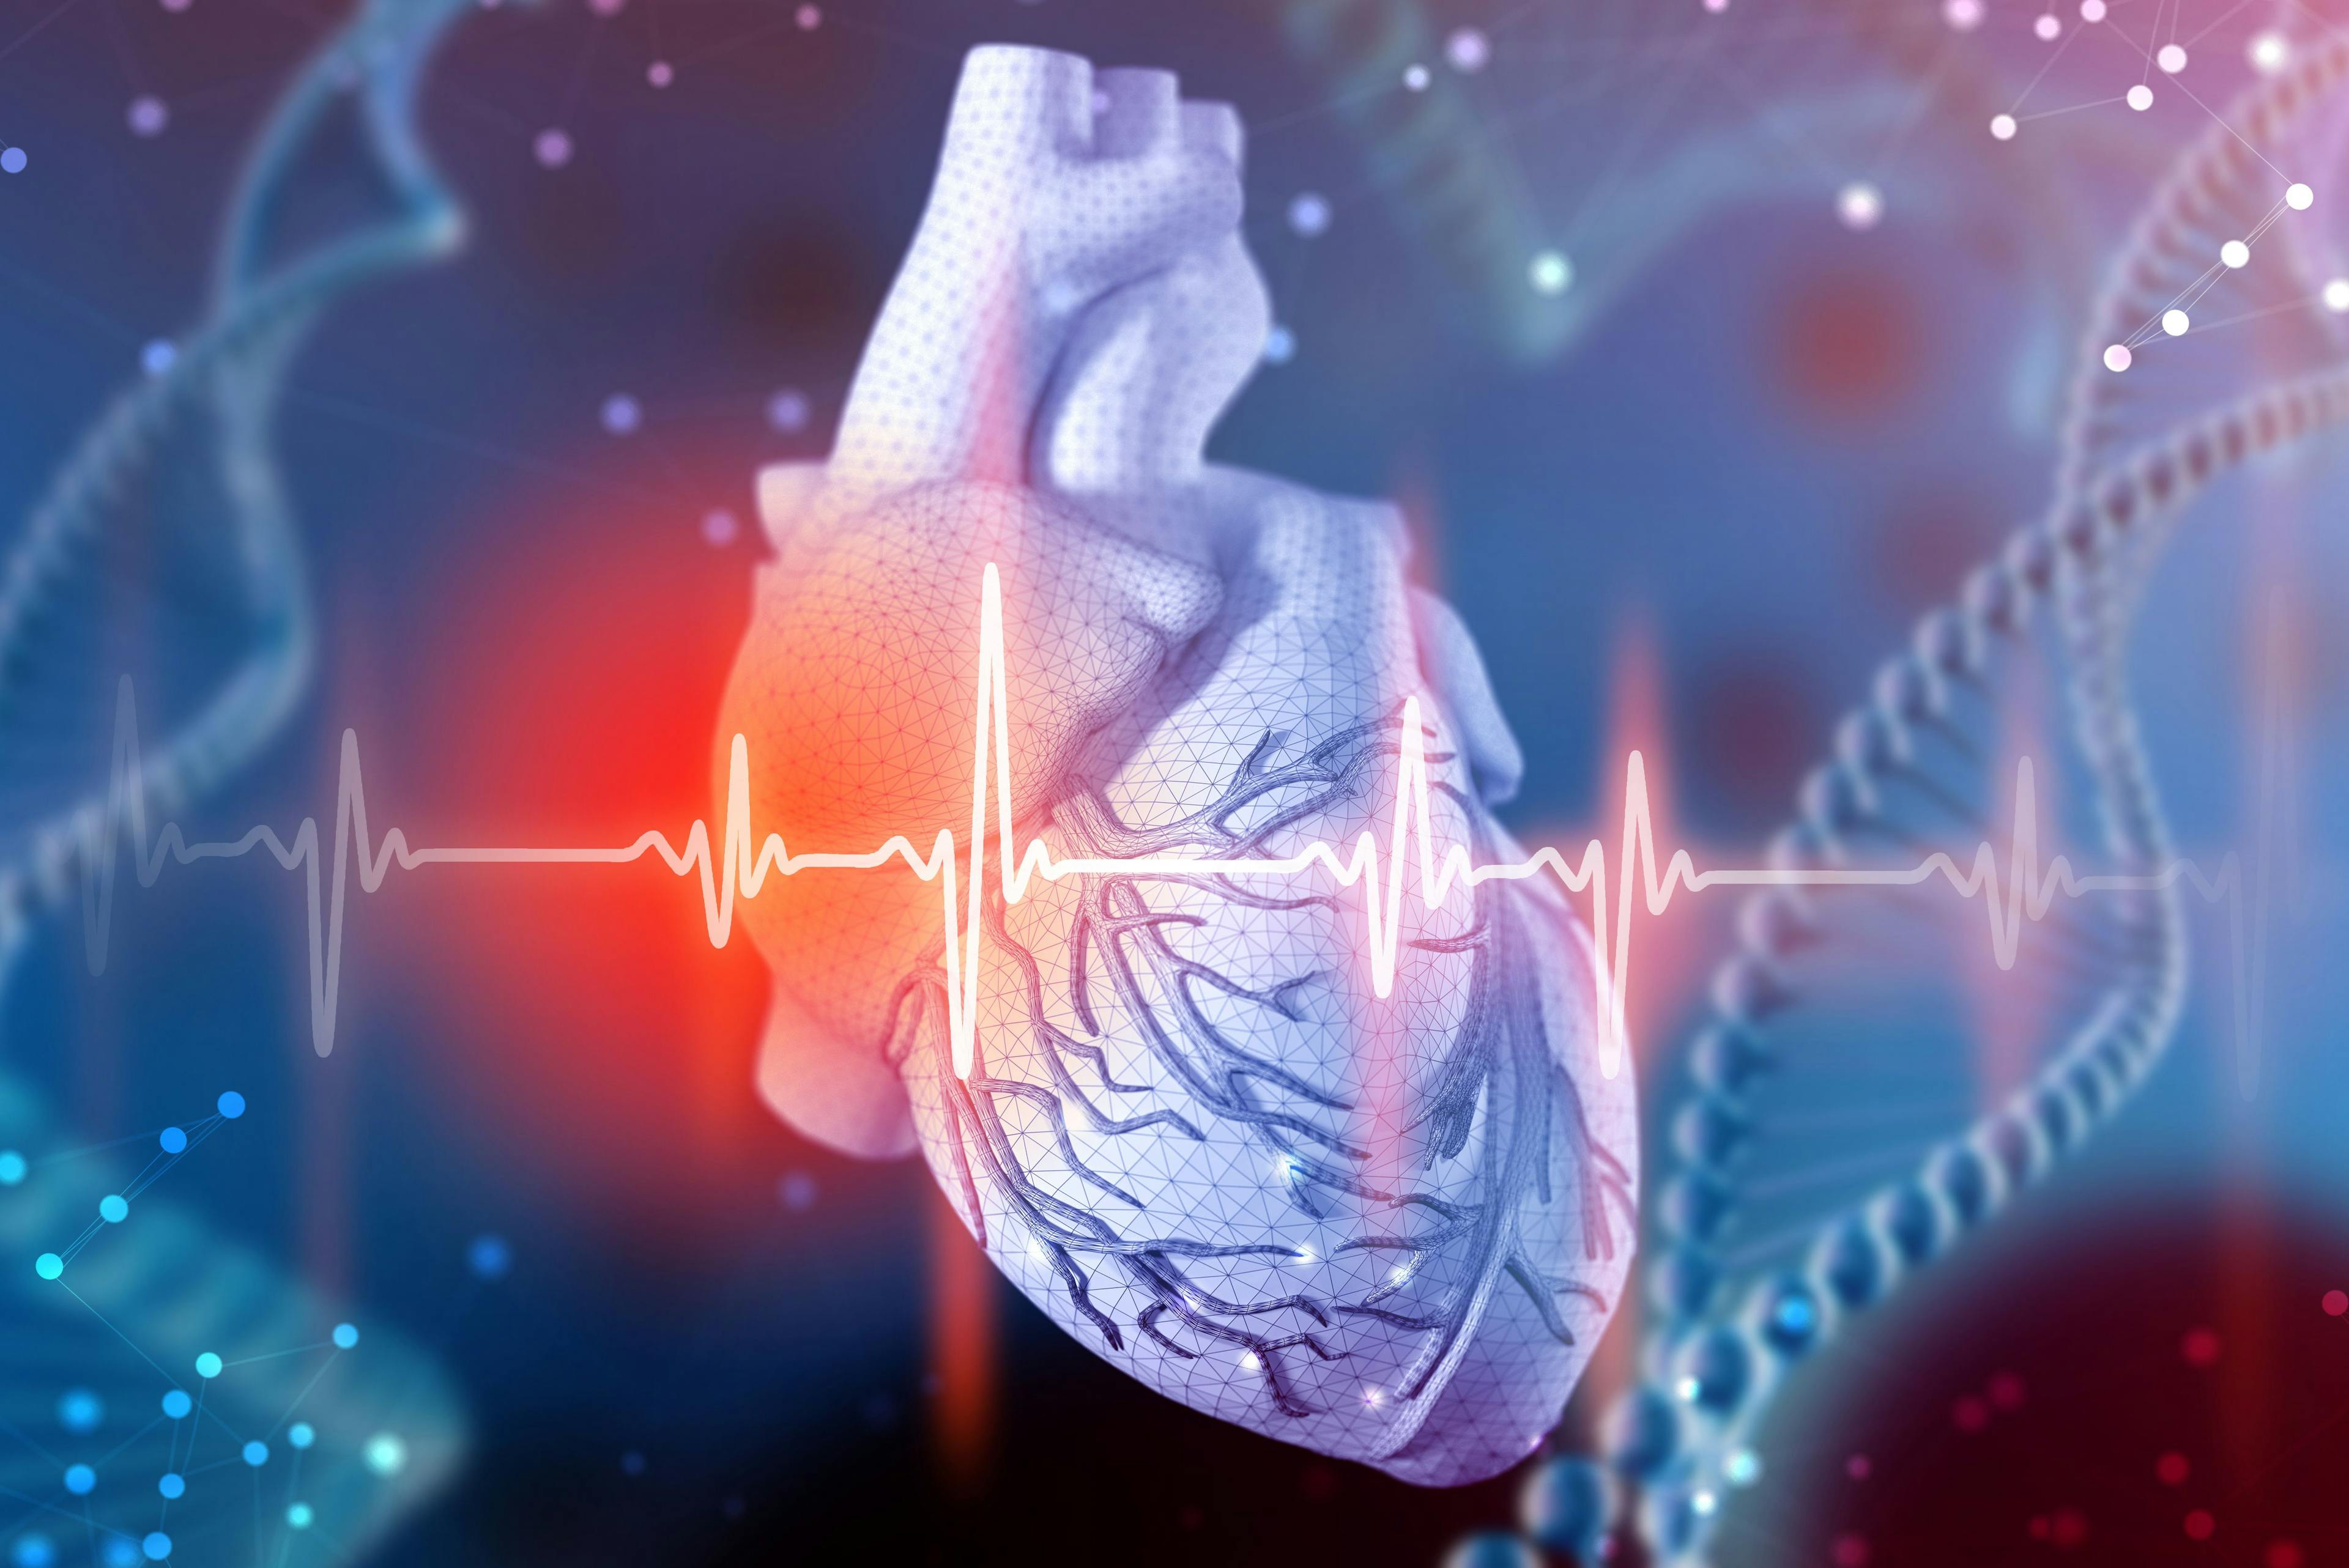 3d illustration of human heart and cardiogram on futuristic blue background. | Image Credit: Artem - stock.adobe.com